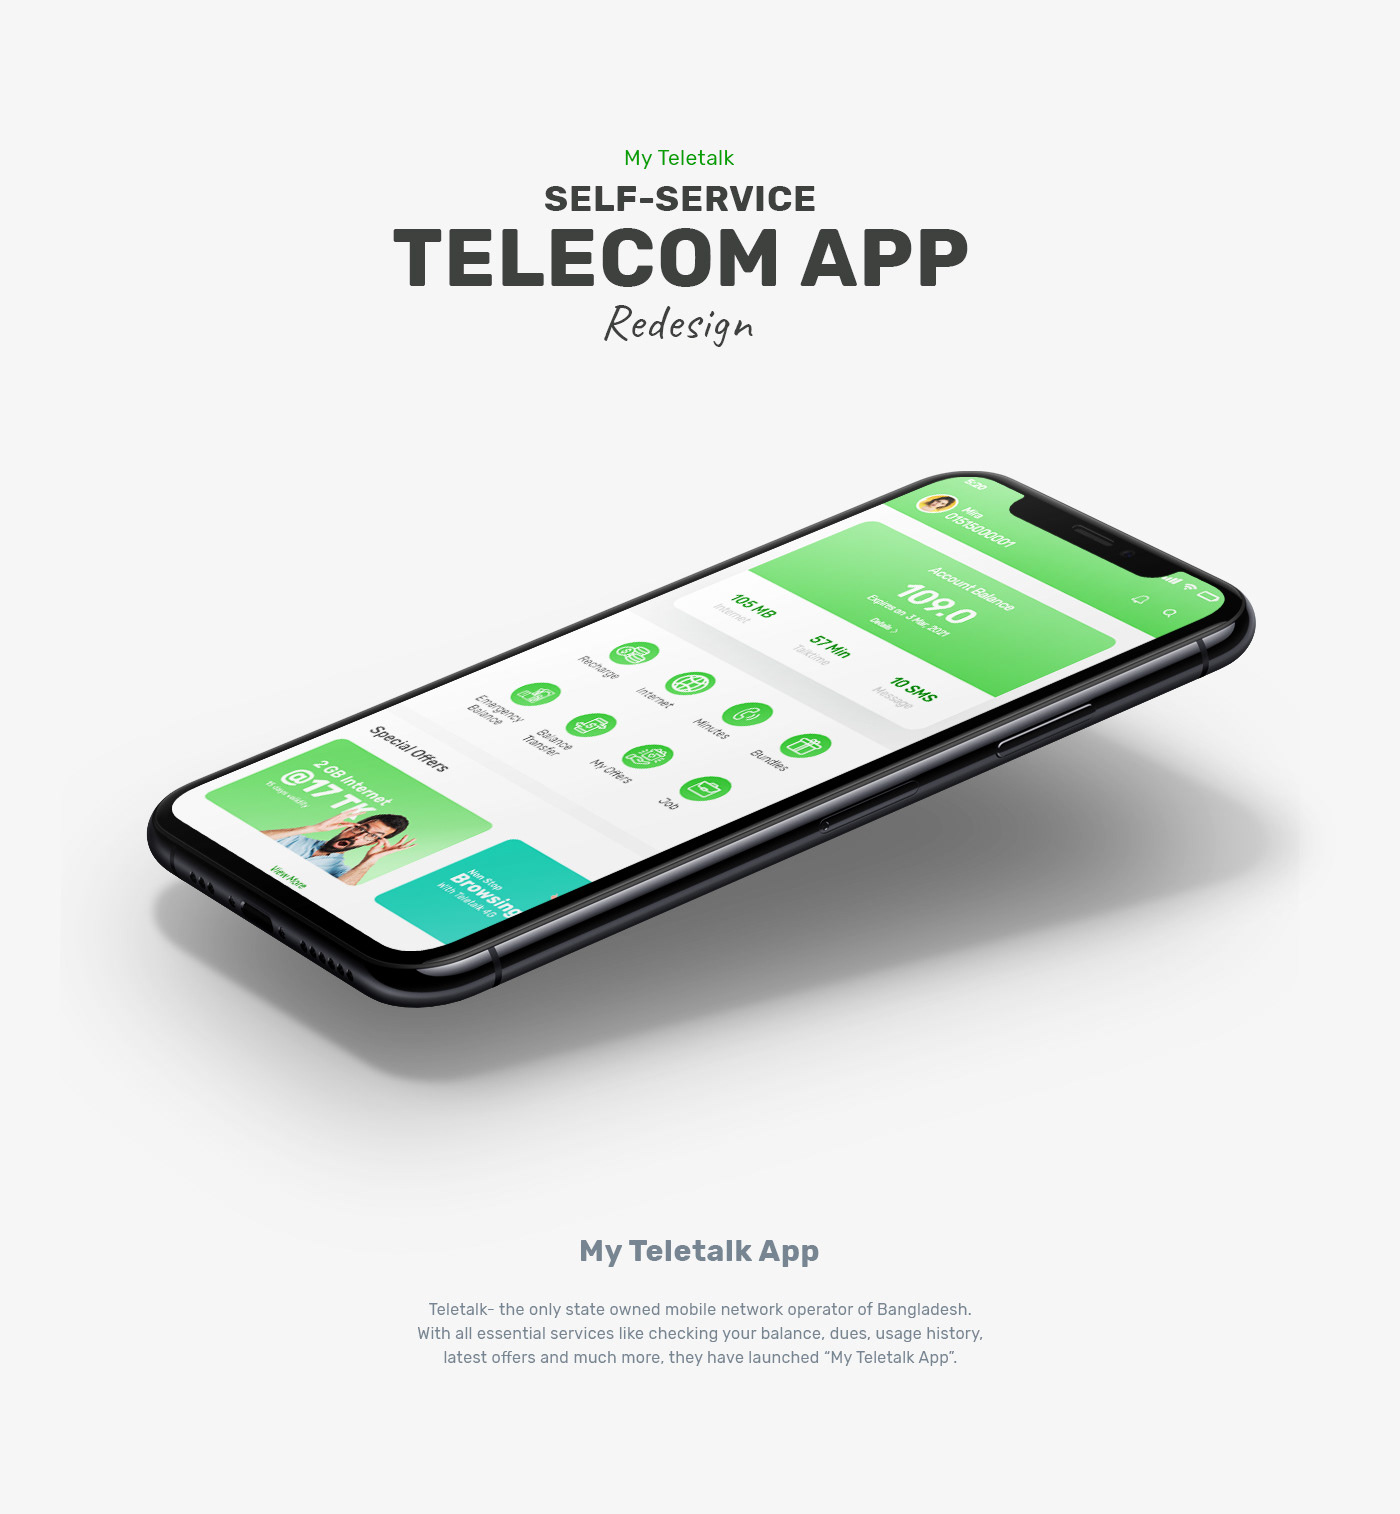 Teletalk self service mobile app uiux redesign concept case study.
